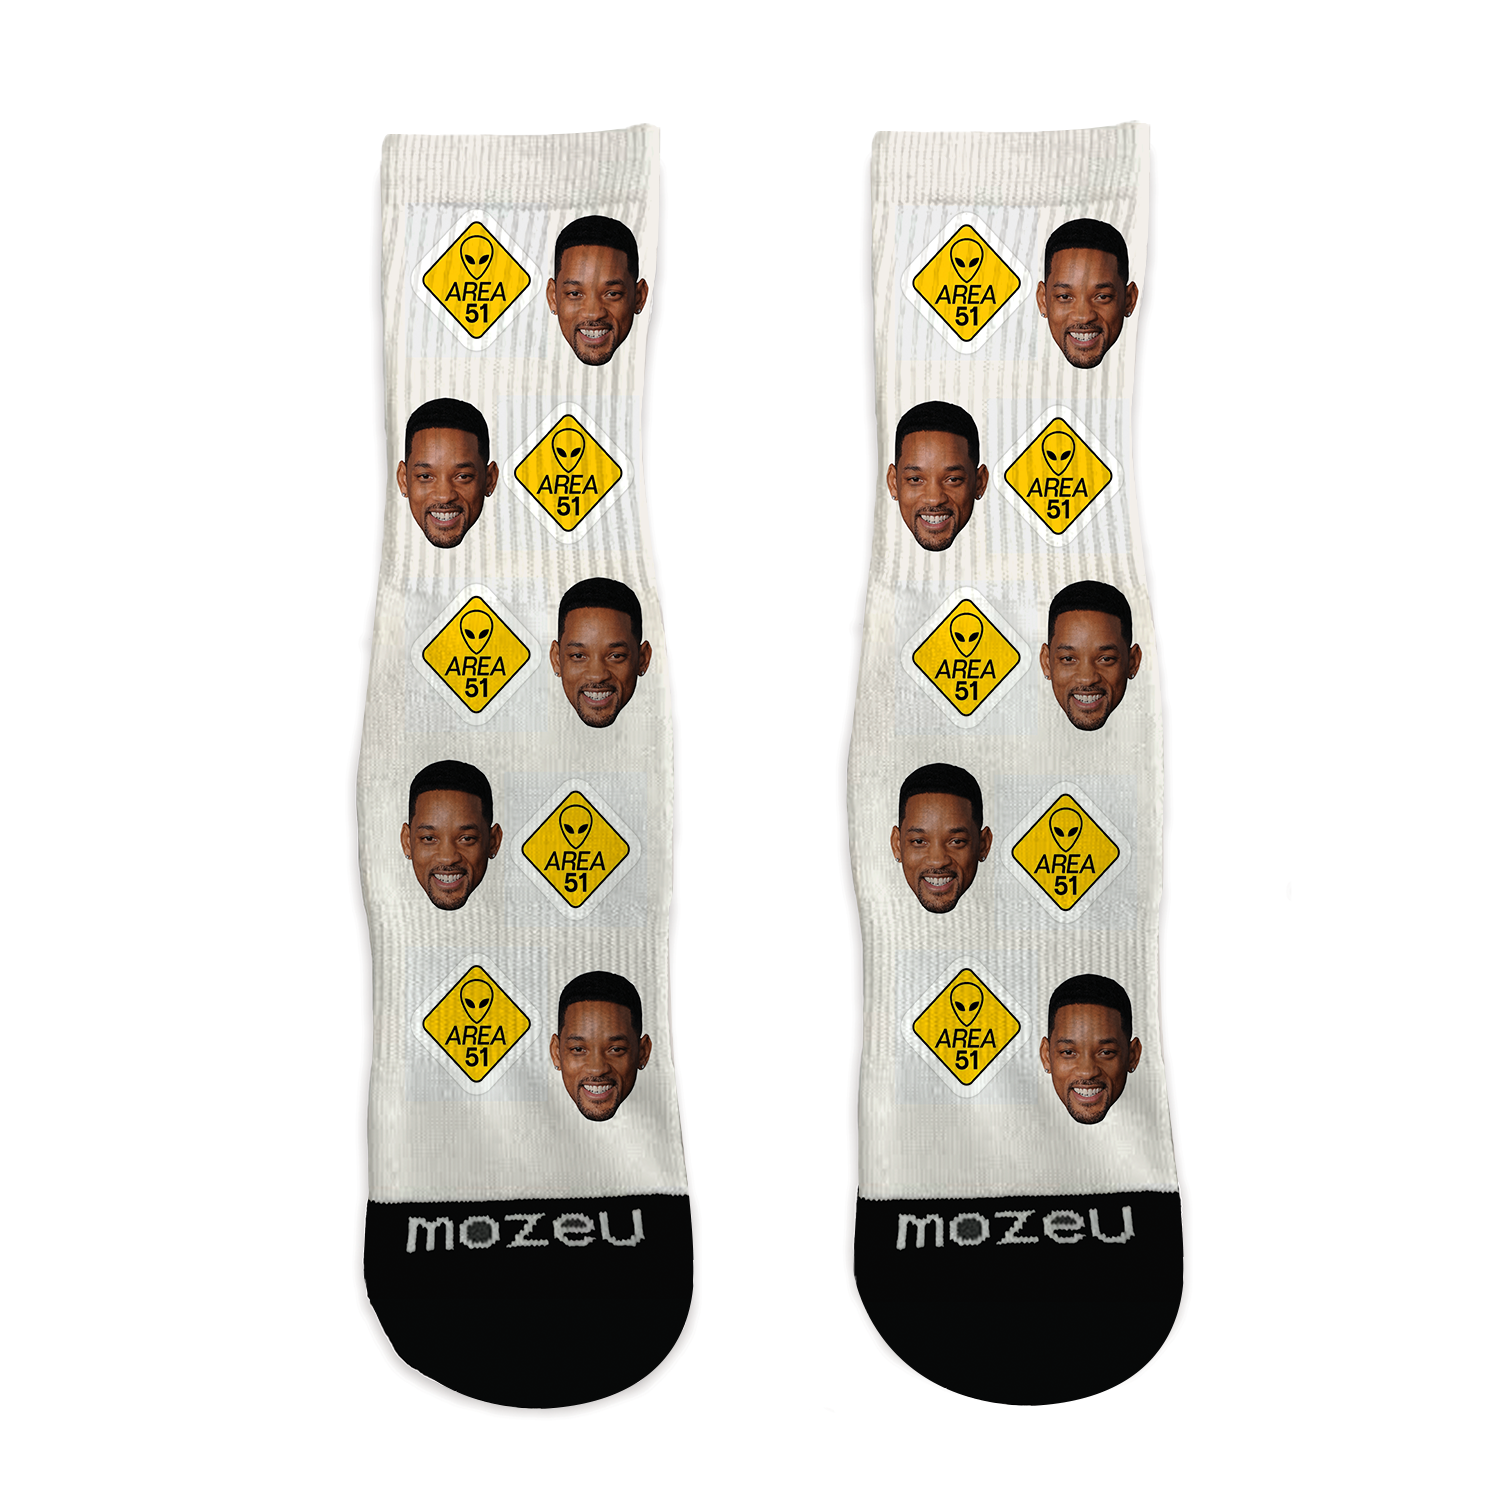 Custom Face Socks - Area 51 – Mozeu Socks